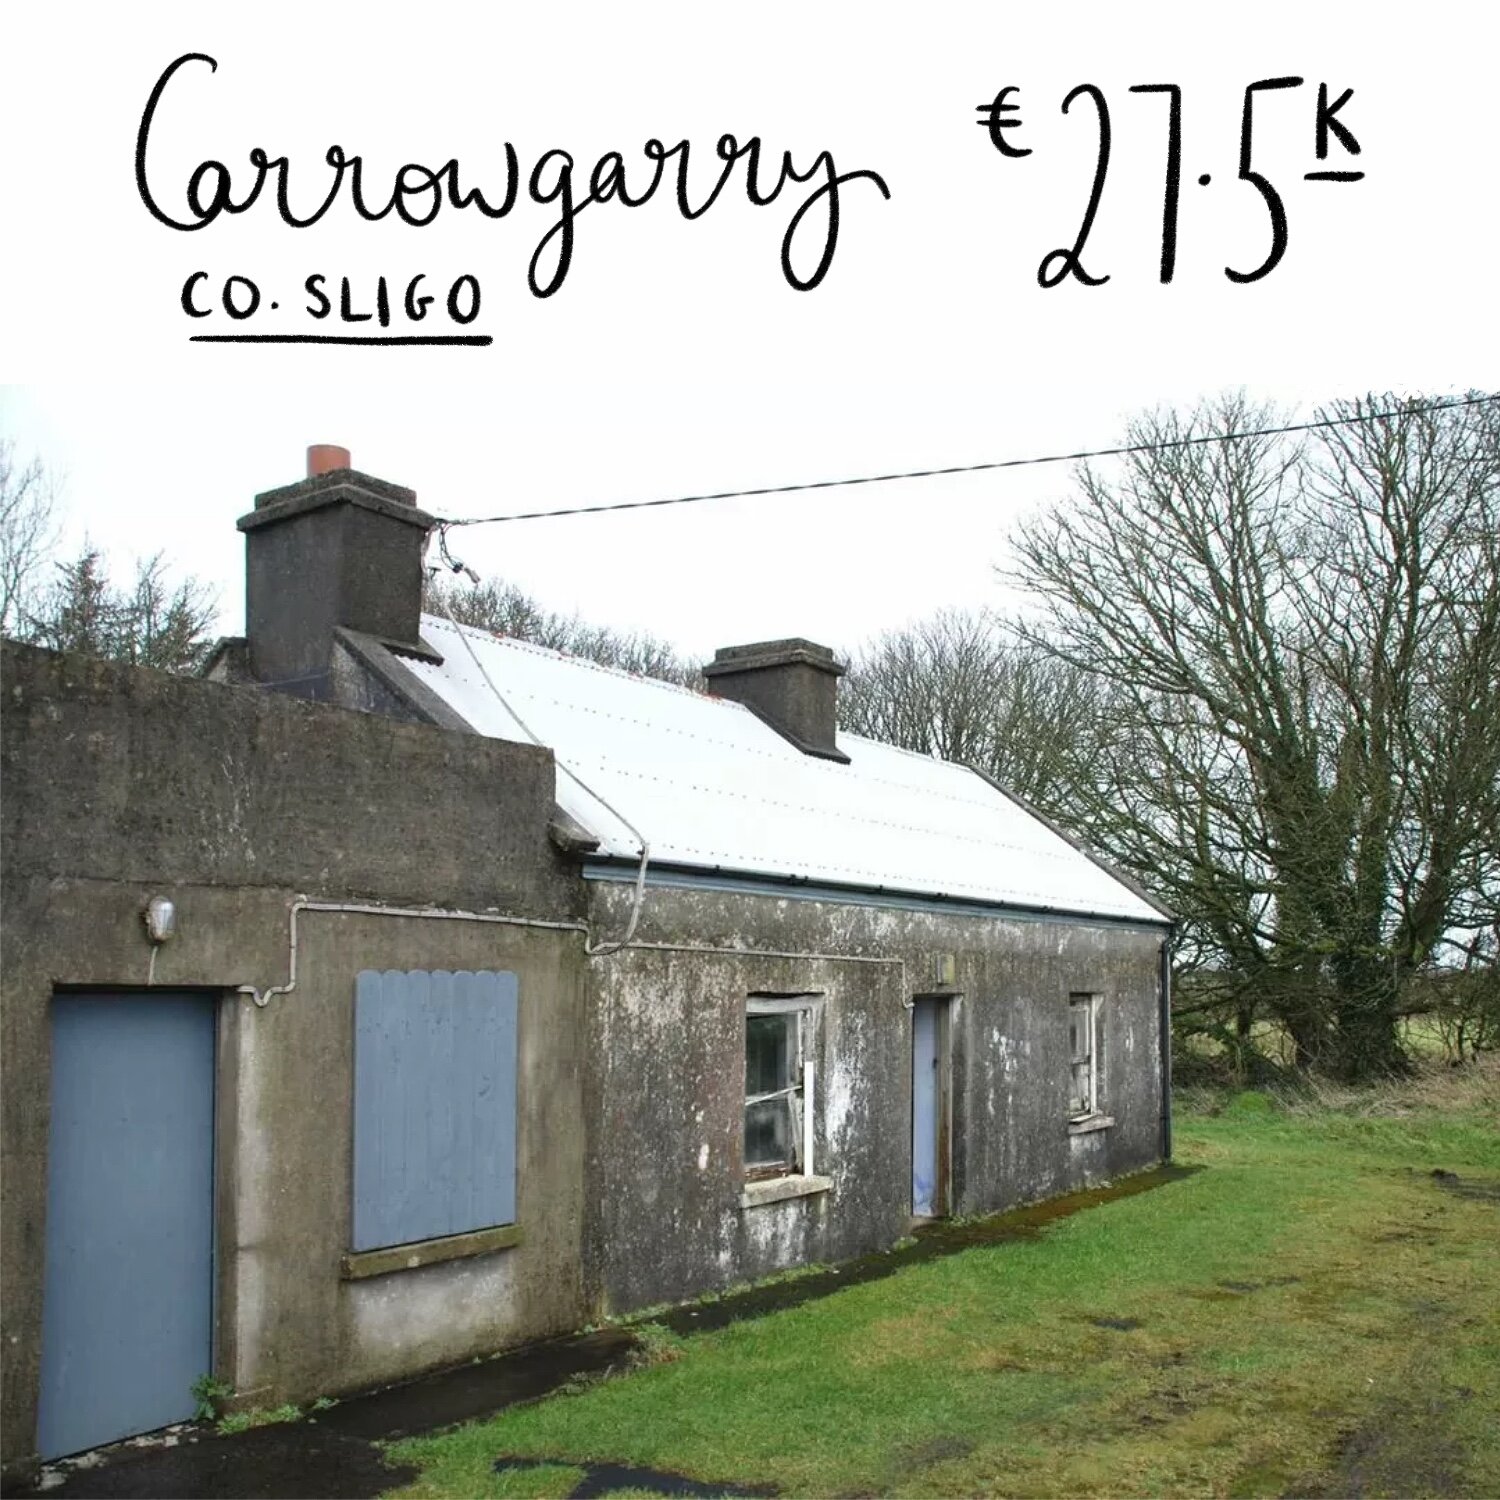 Carrowgarry, Enniscrone, Co. Sligo. €27.5k